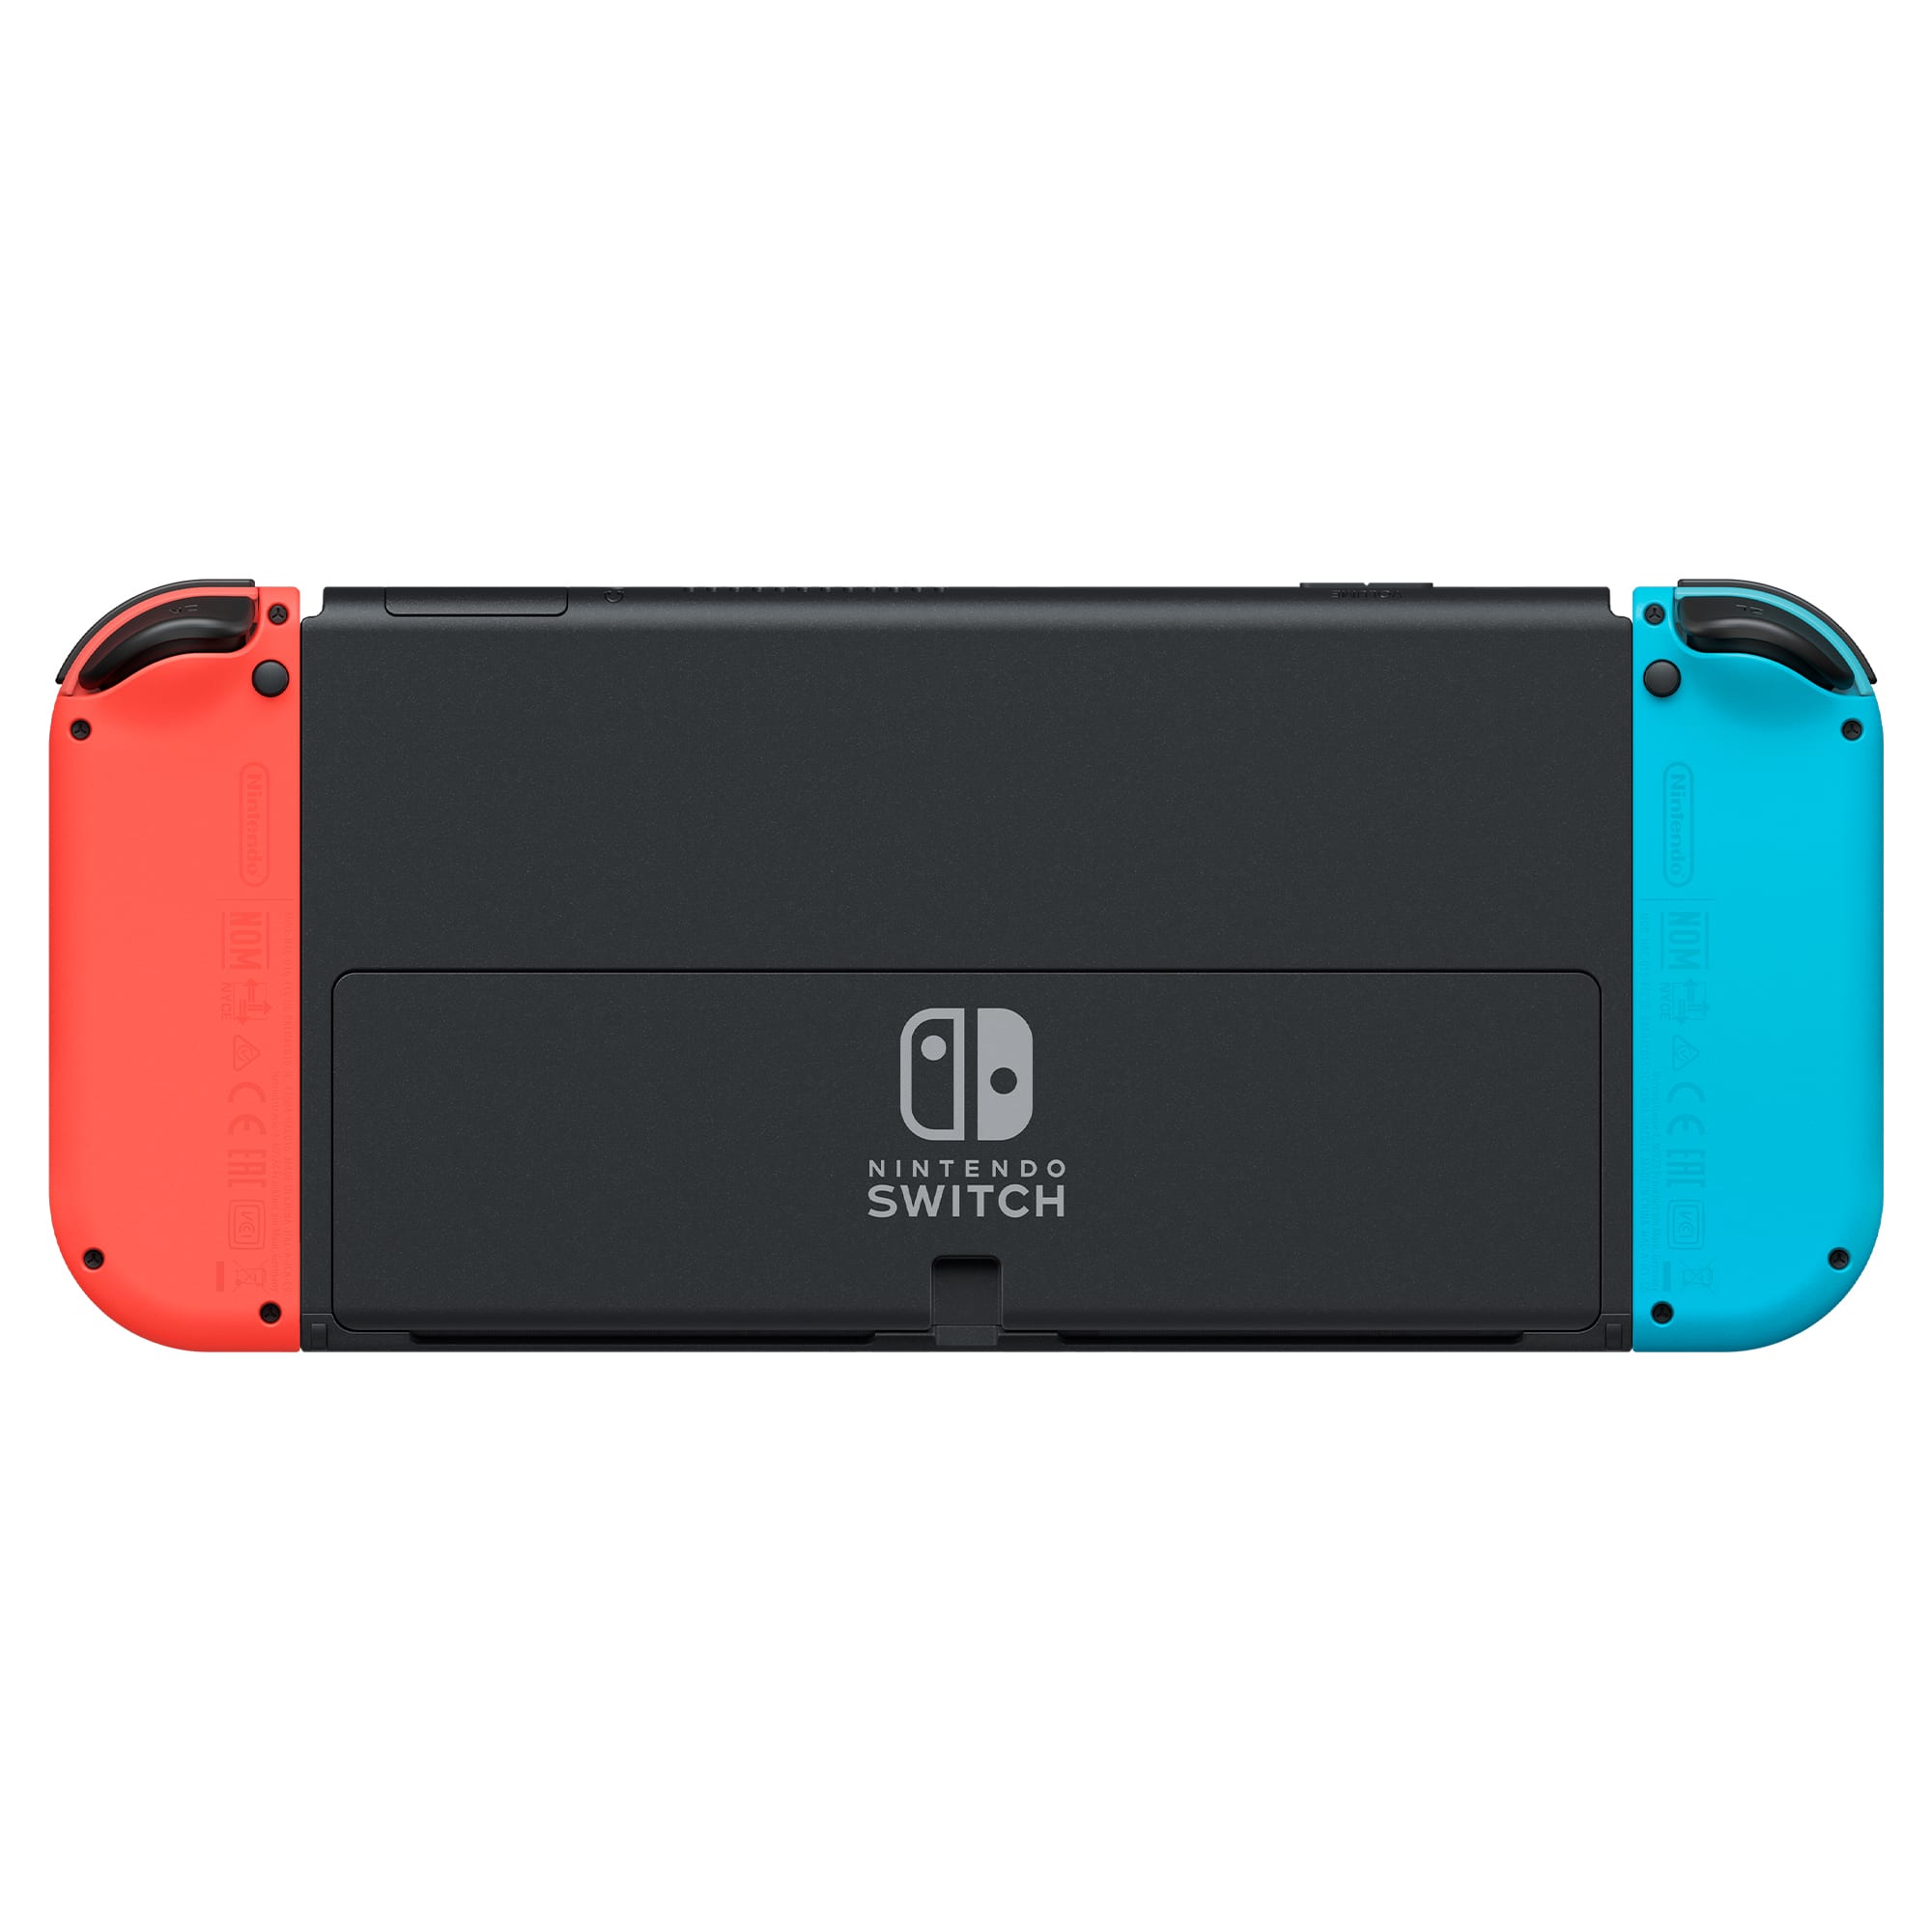 Nintendo Switch OLED Model 64GB, Blue / Red - Refurbished Excellent